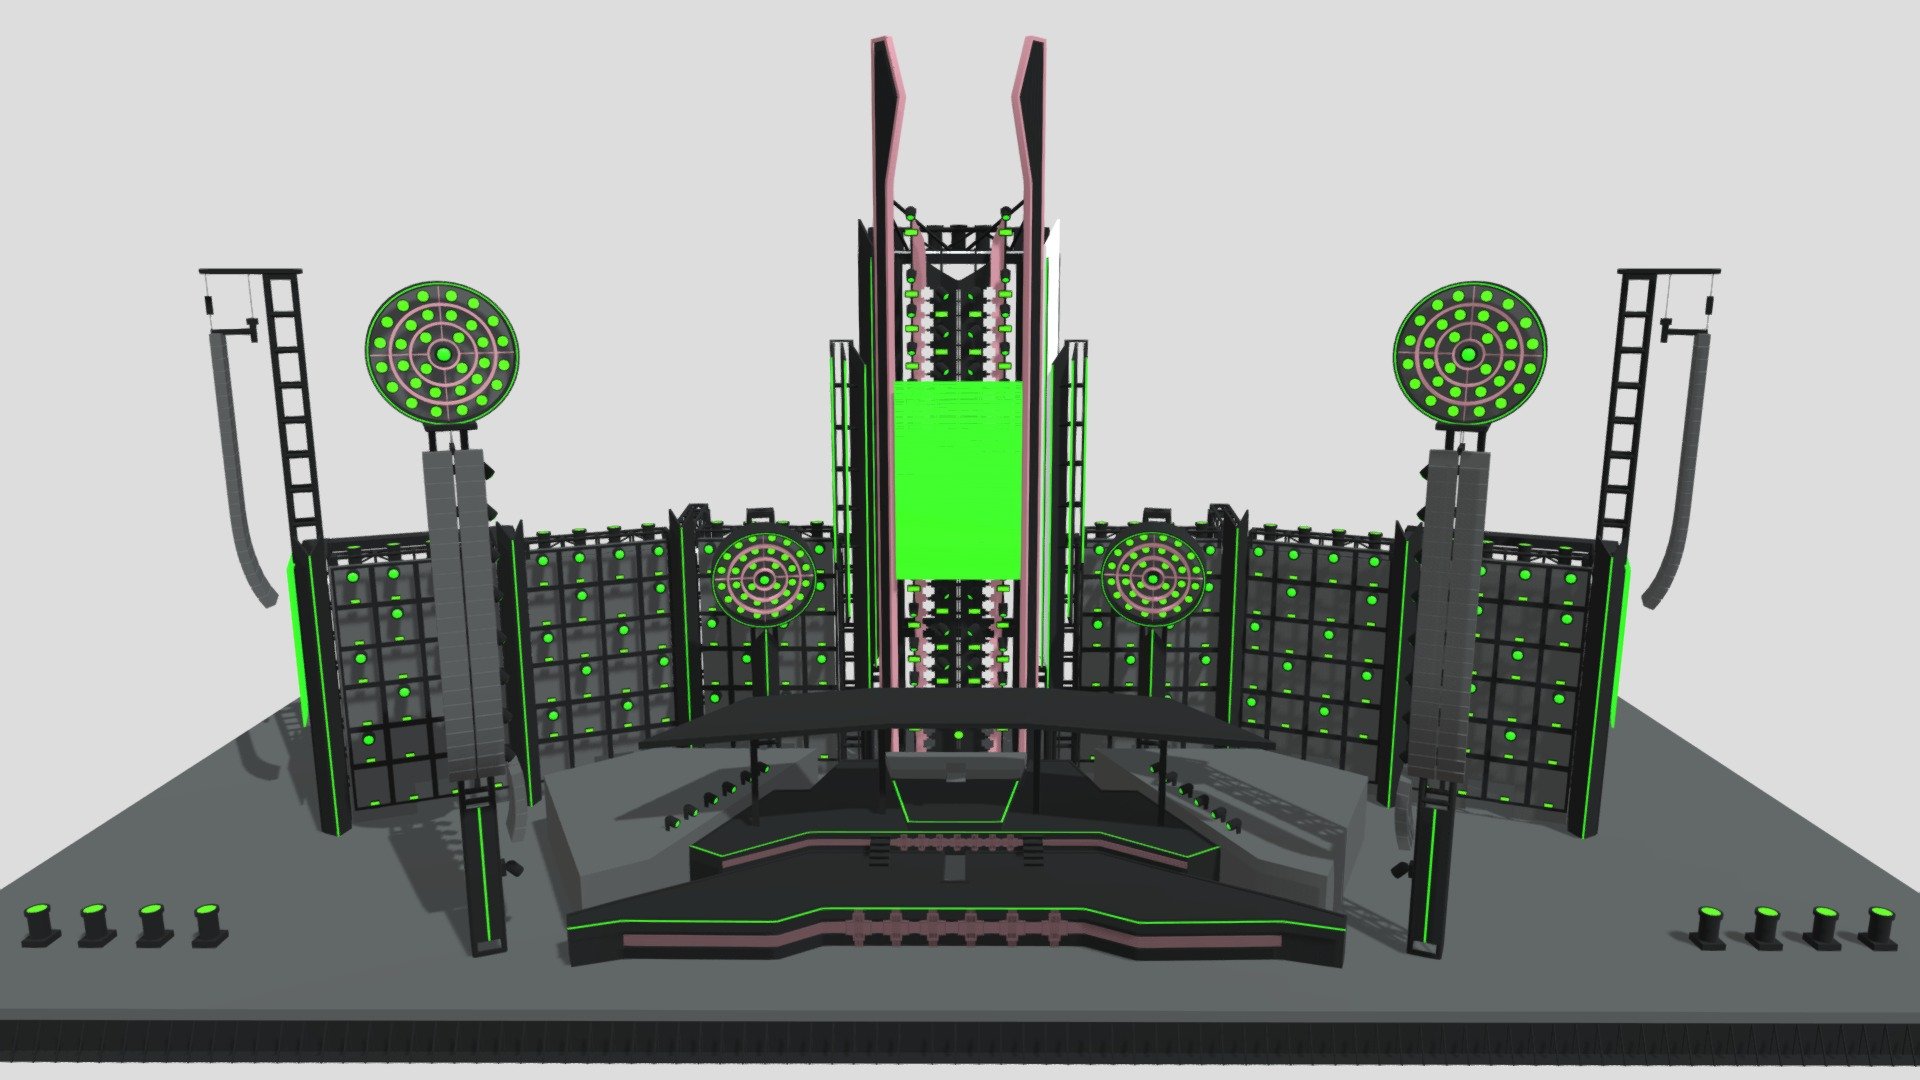 Ig: dan.eg / dan.dsgner
Rammstein stadium world tour Stage by Dan esquivel designer - Rammstein Stage - 3D model by danxxxse 3d model